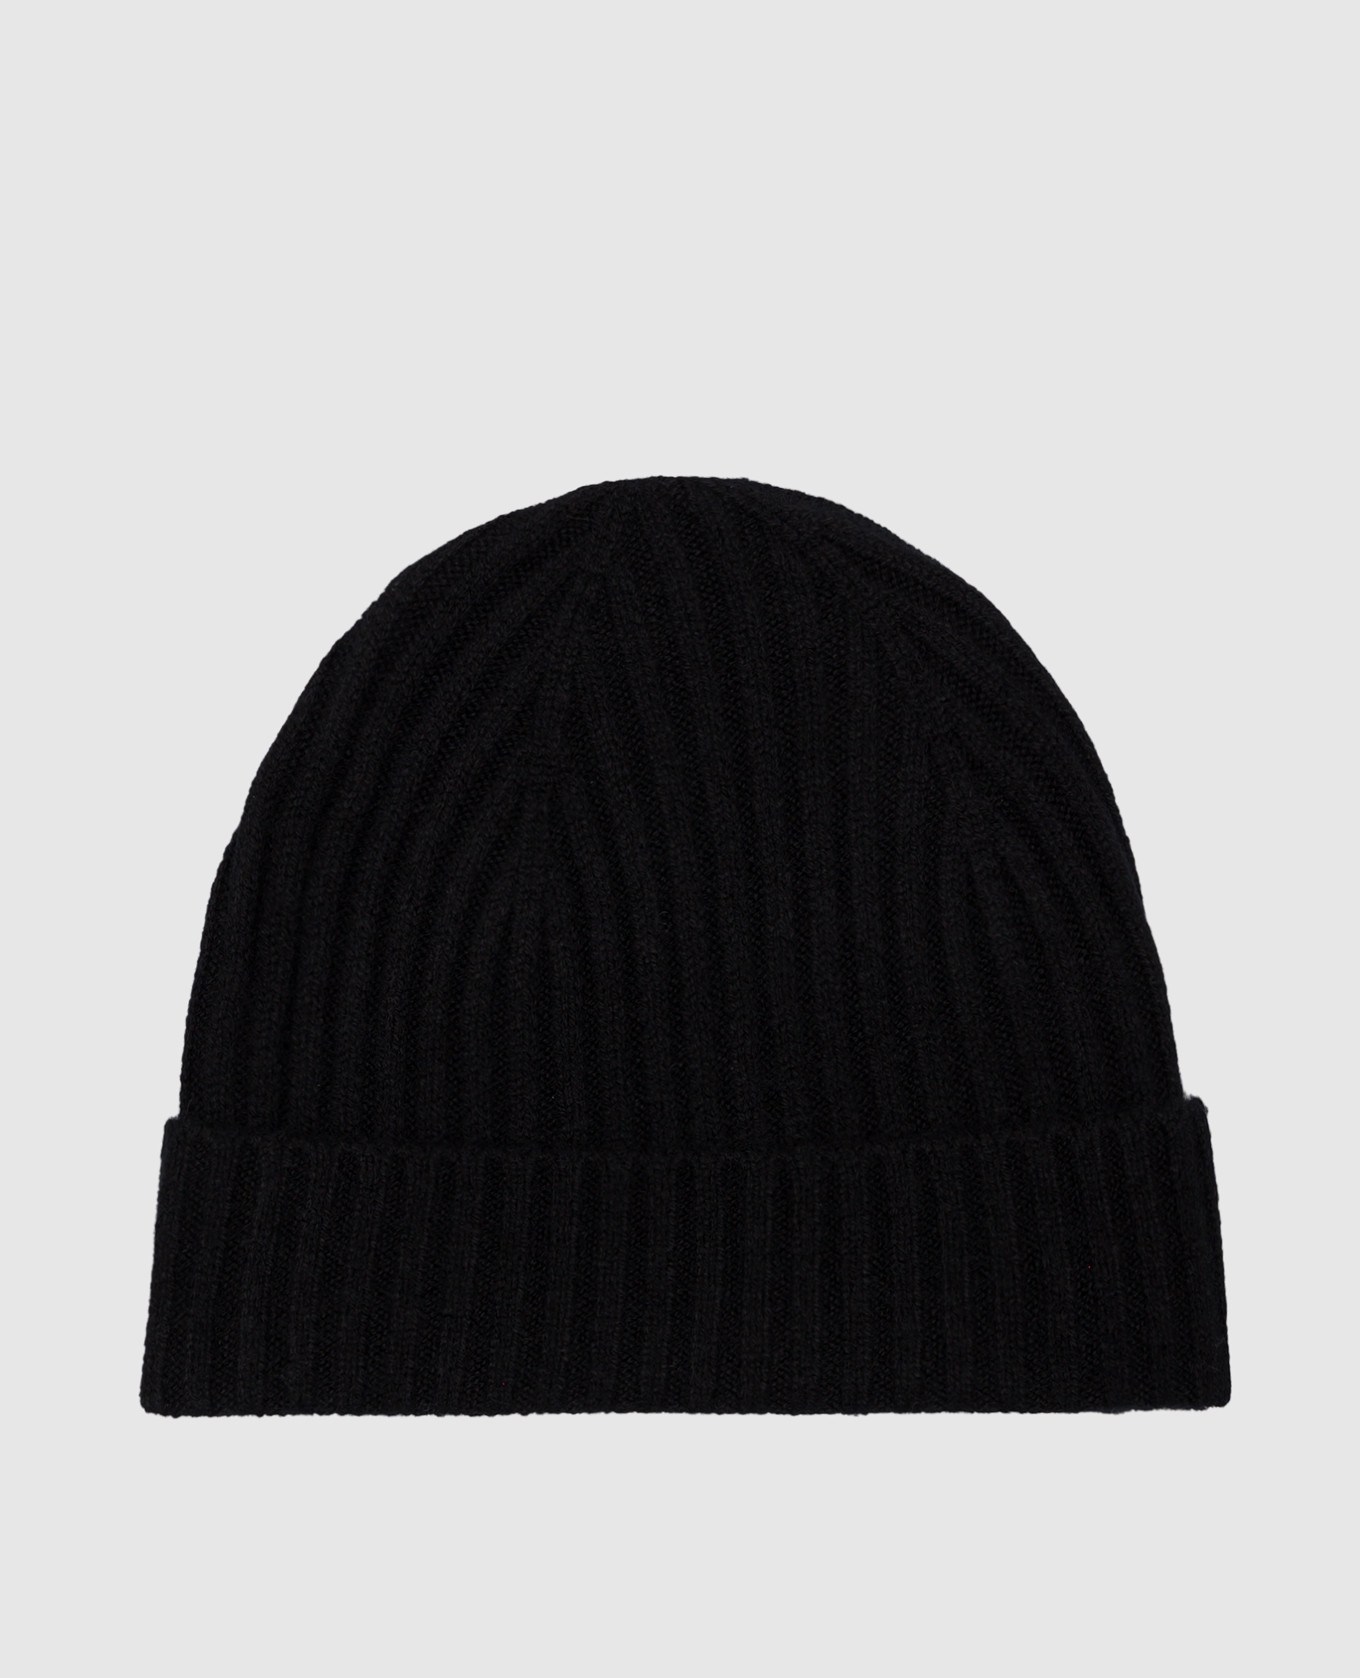 Black cashmere hat